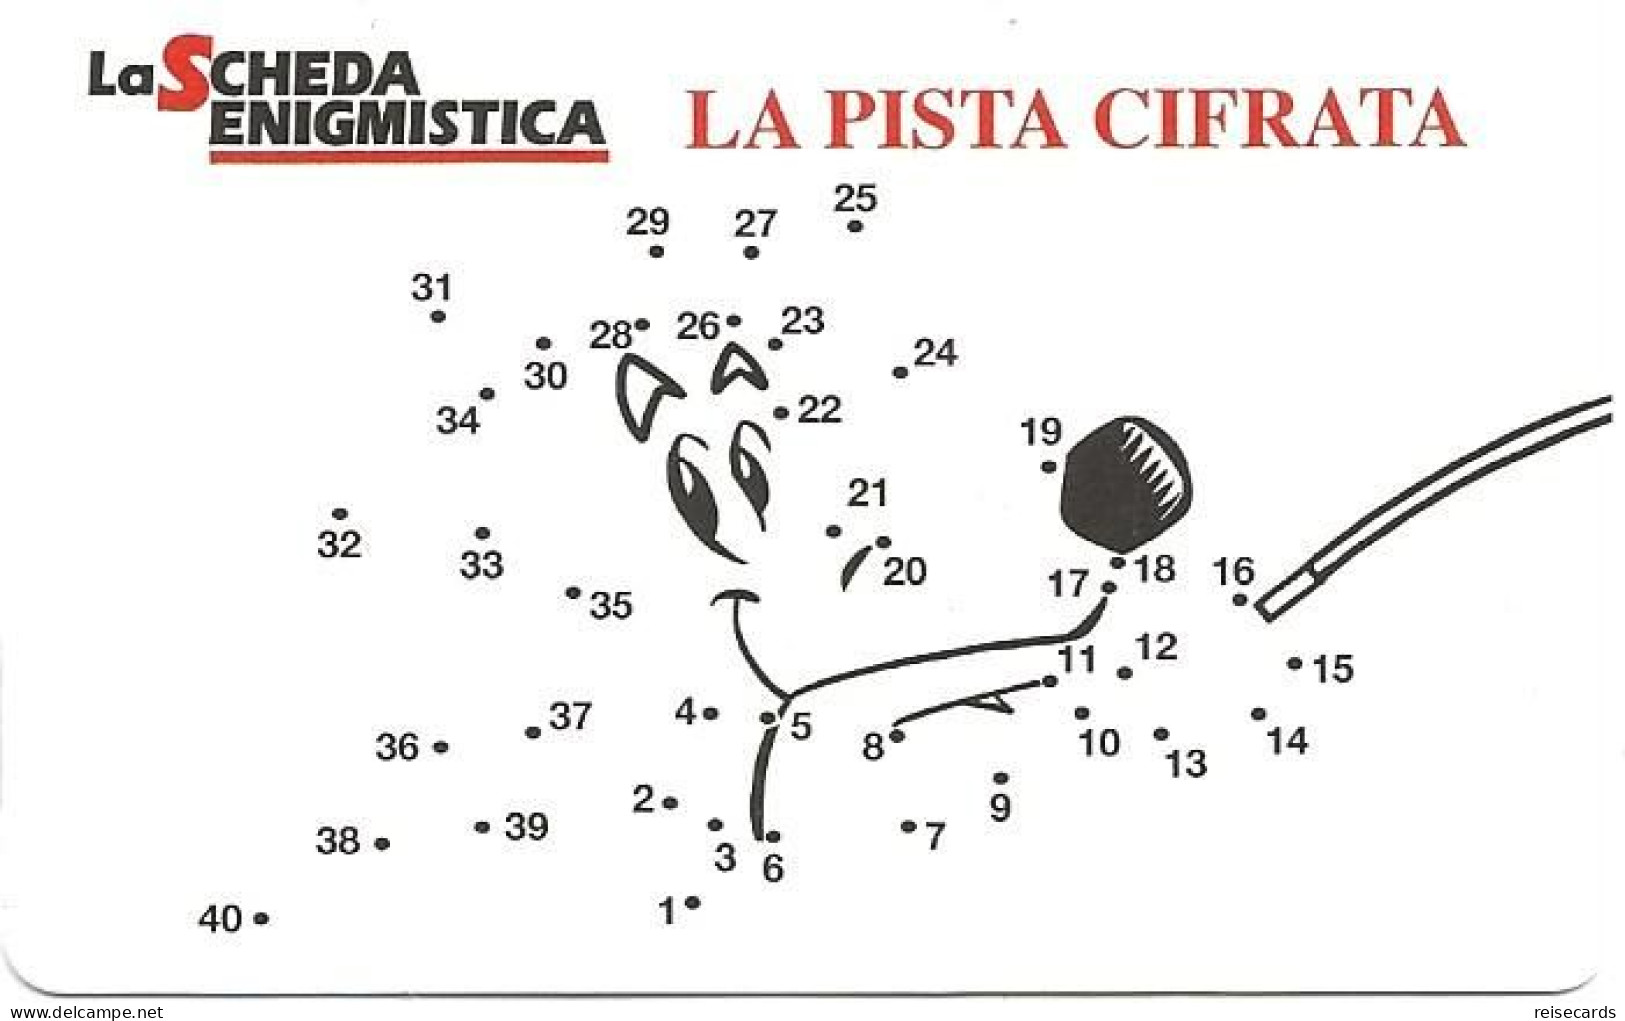 Italy: Telecom Italia - La Scheda Enigmistica, La Pista Cifrata - Public Advertising